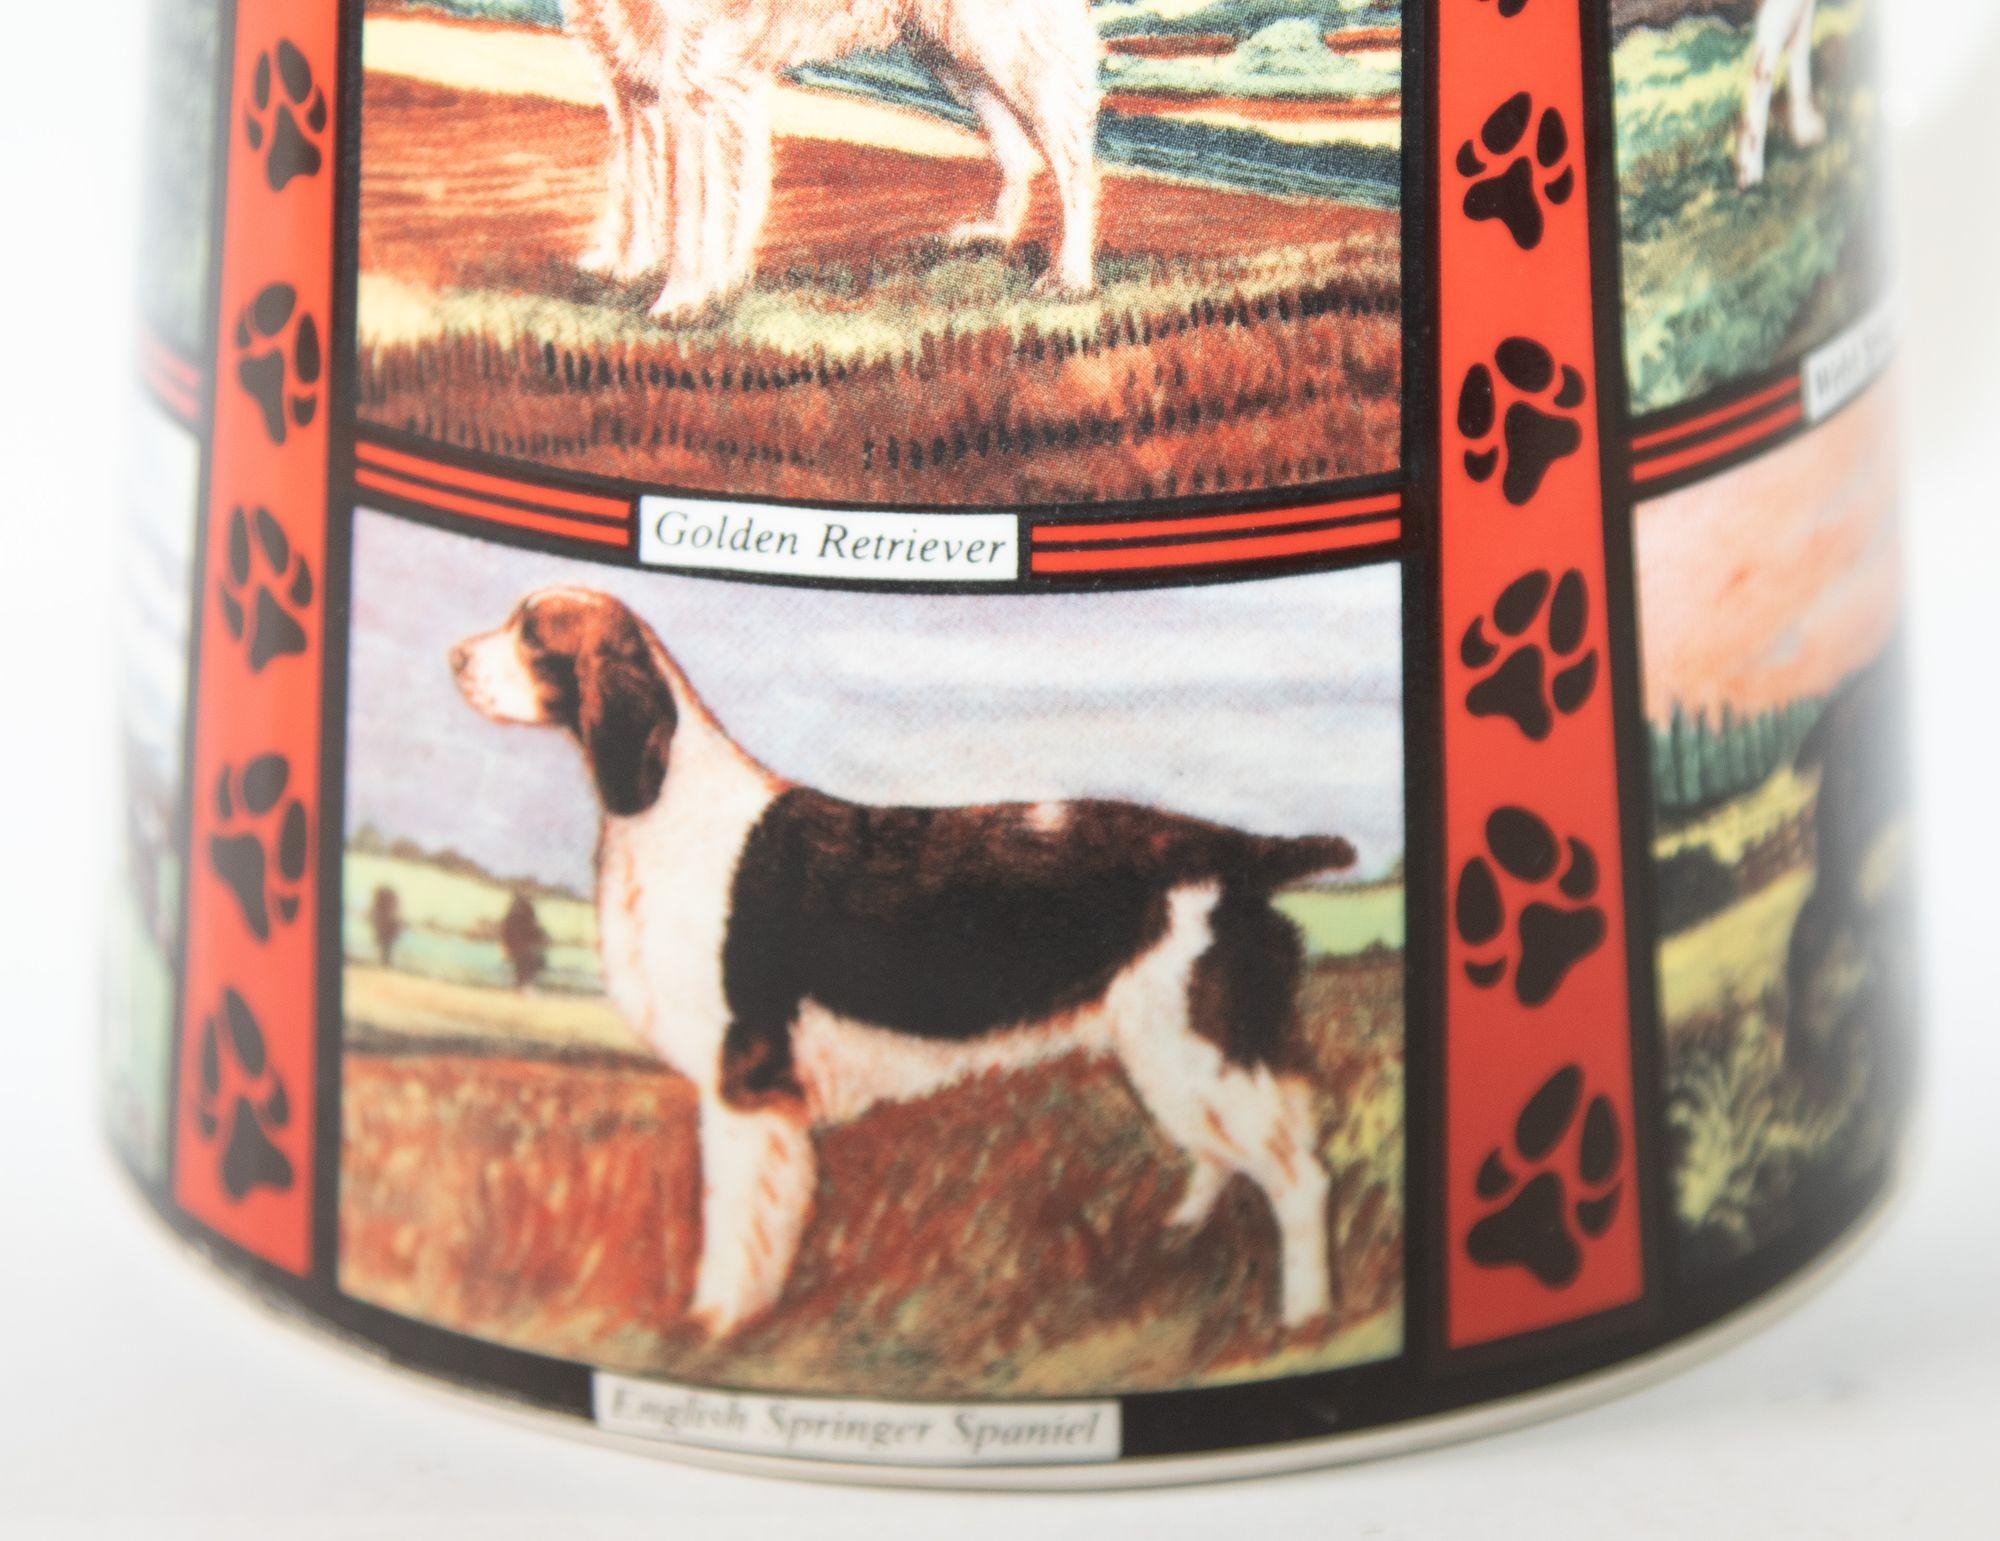 Vintage 1970s Ceramic Pitcher, Derbyshire England with Dog Breeds Pictures For Sale 10